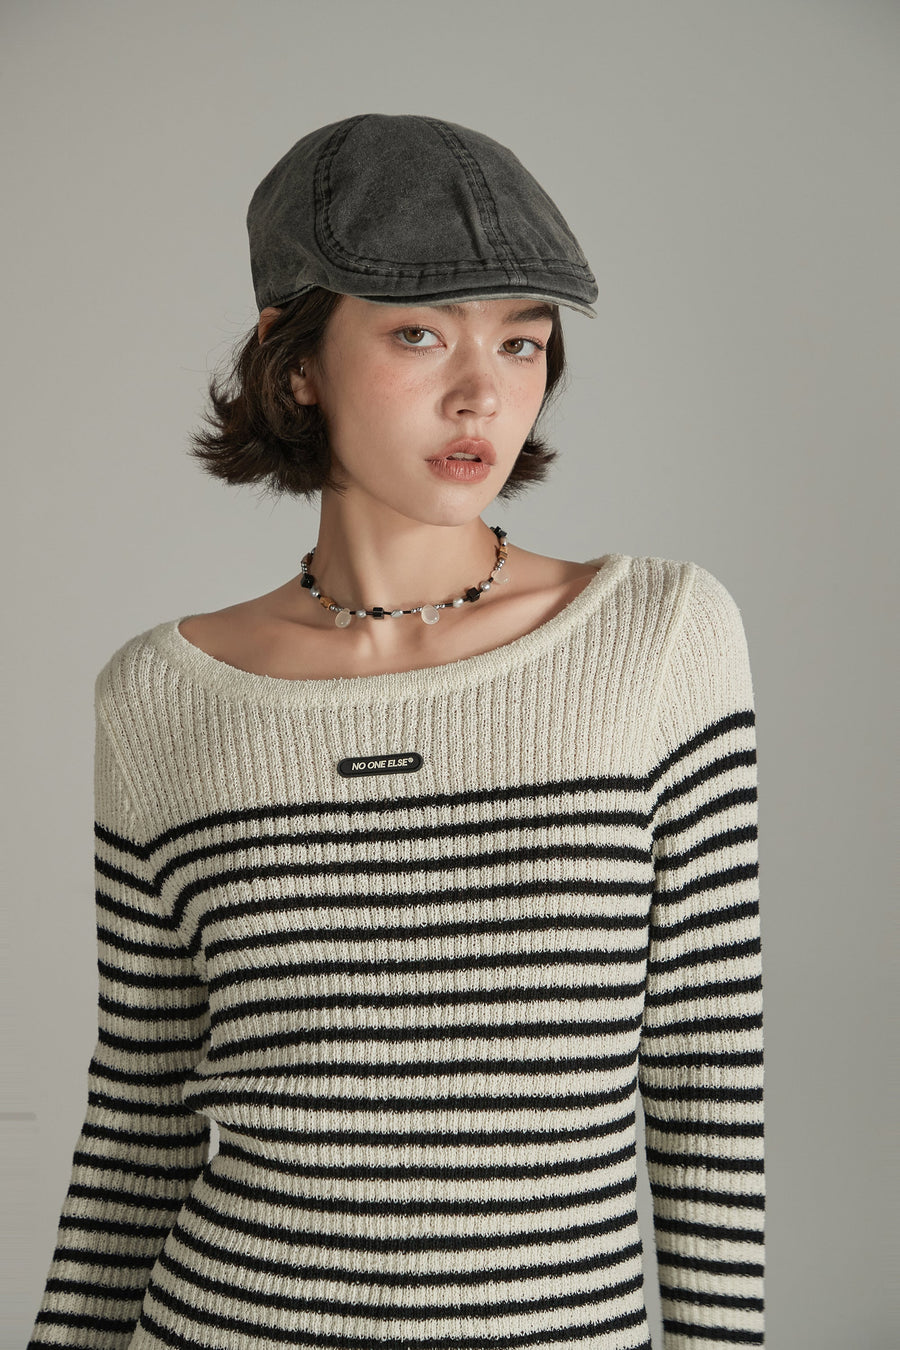 CHUU Simple Stripe Knit Sweater